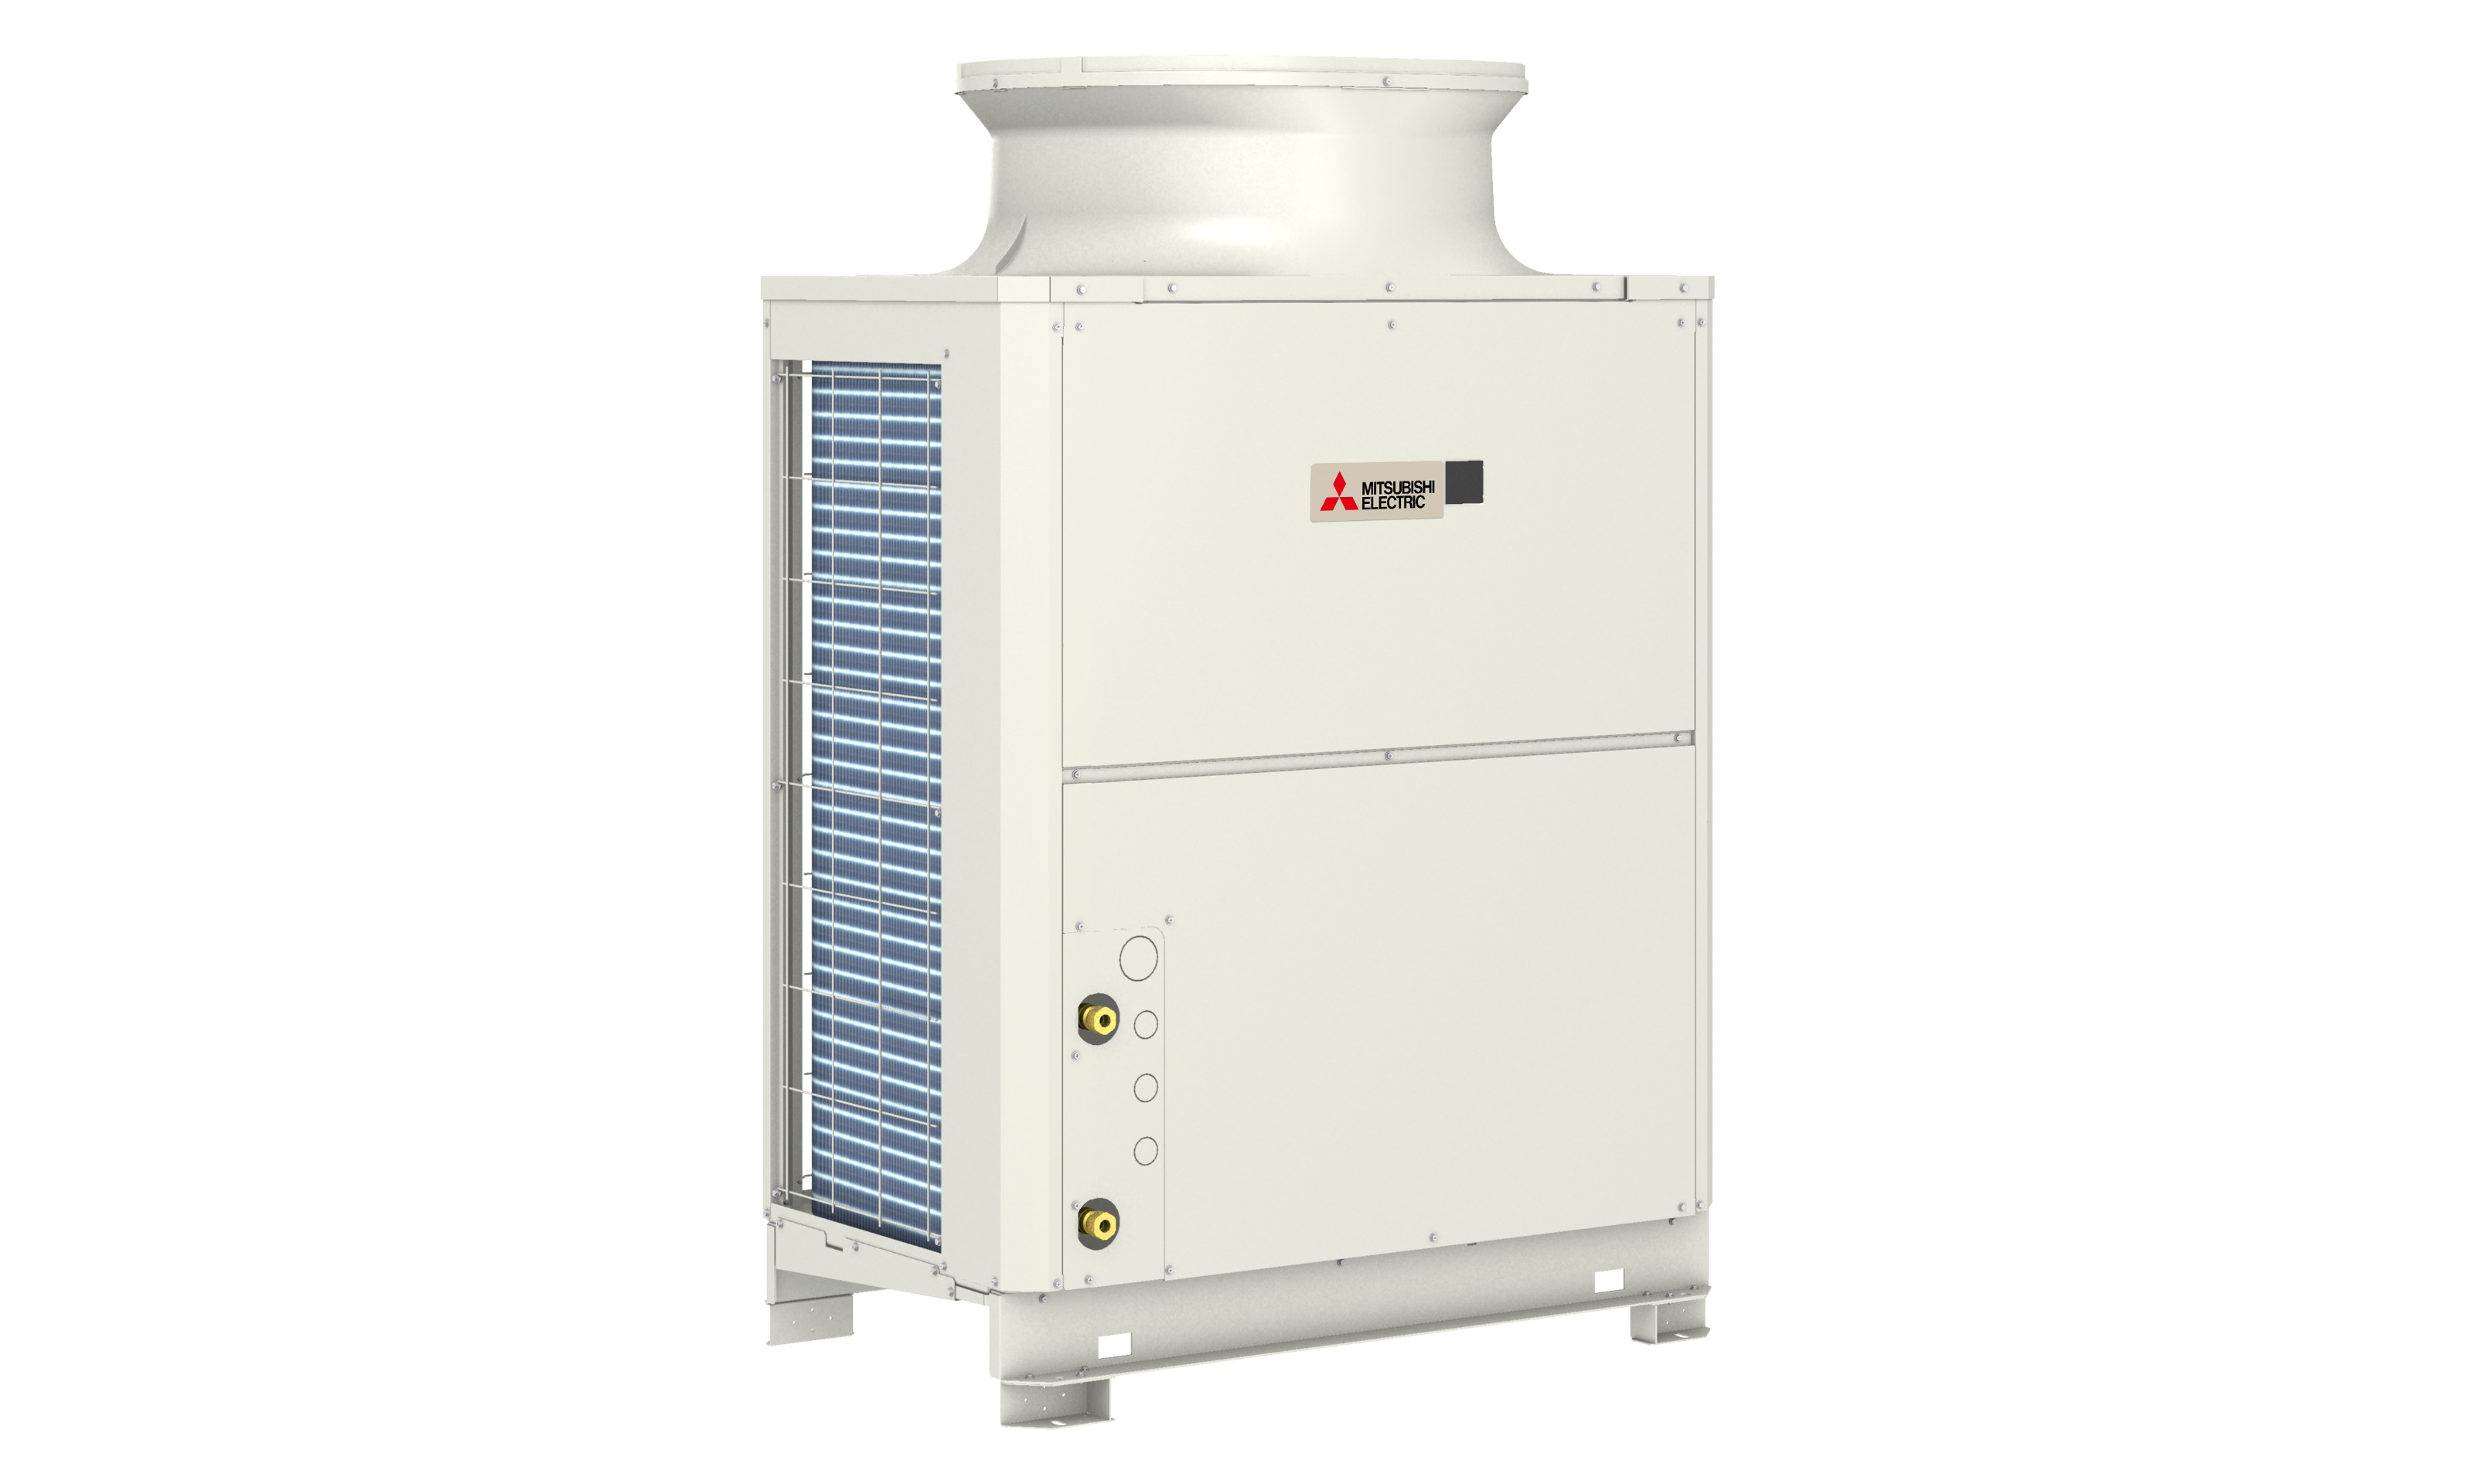 High temperature CO2 heat pump increases hot water efficiency